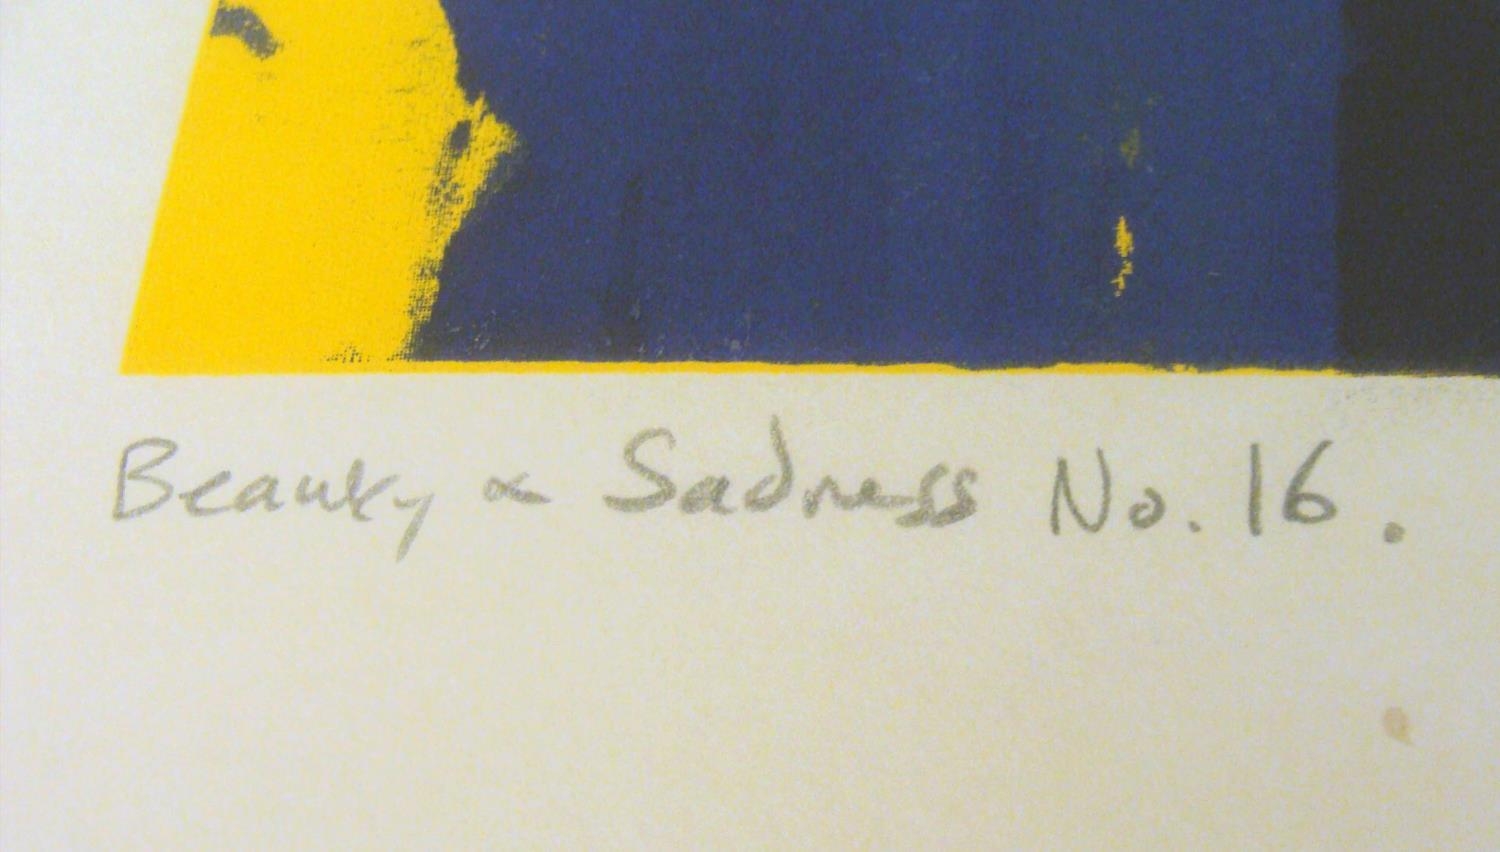 MARTYN BREWSTER (British, b.1952) 'Beauty and Sadness', 1966, a set of three monoprints, - Image 8 of 8